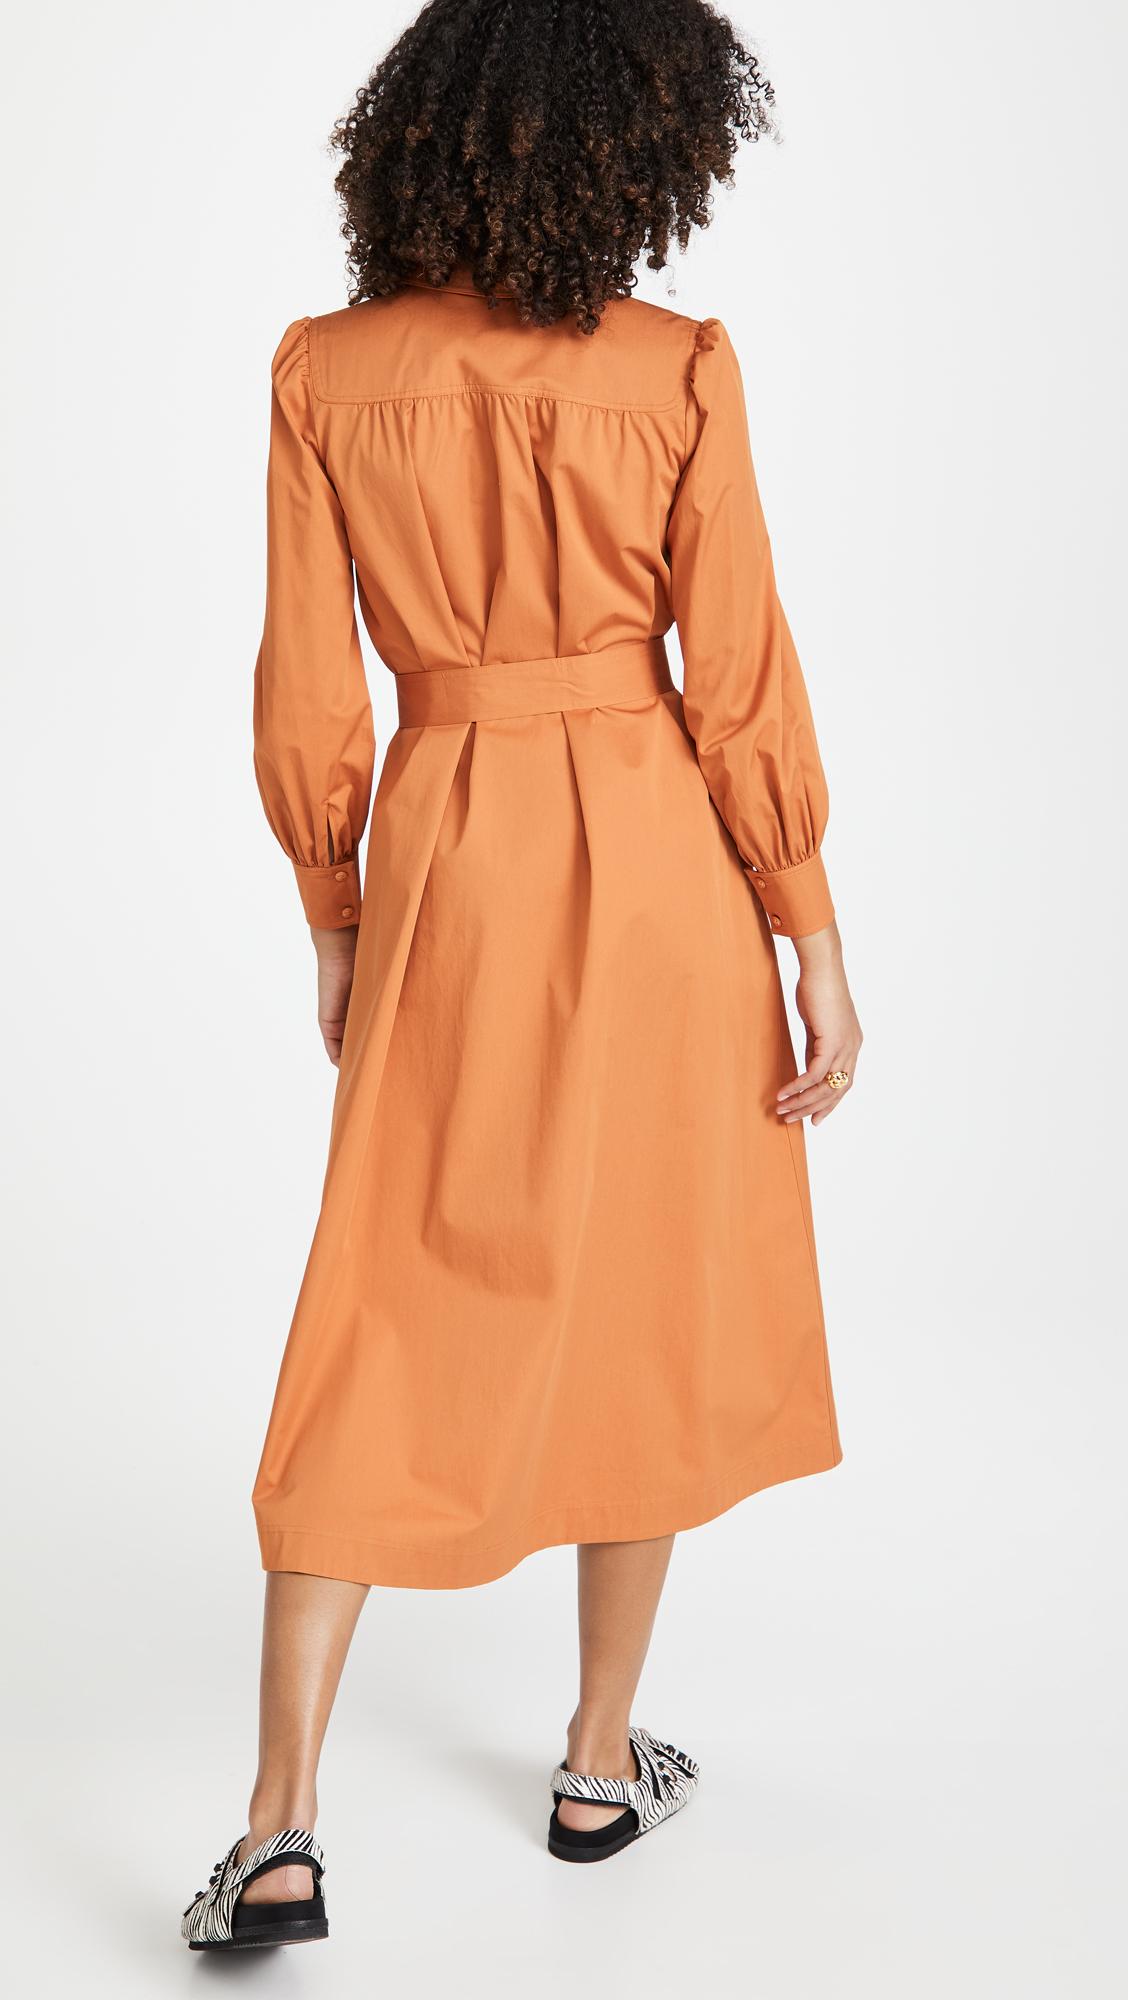 Tory Burch Cotton Artist Dress in Orange - Lyst